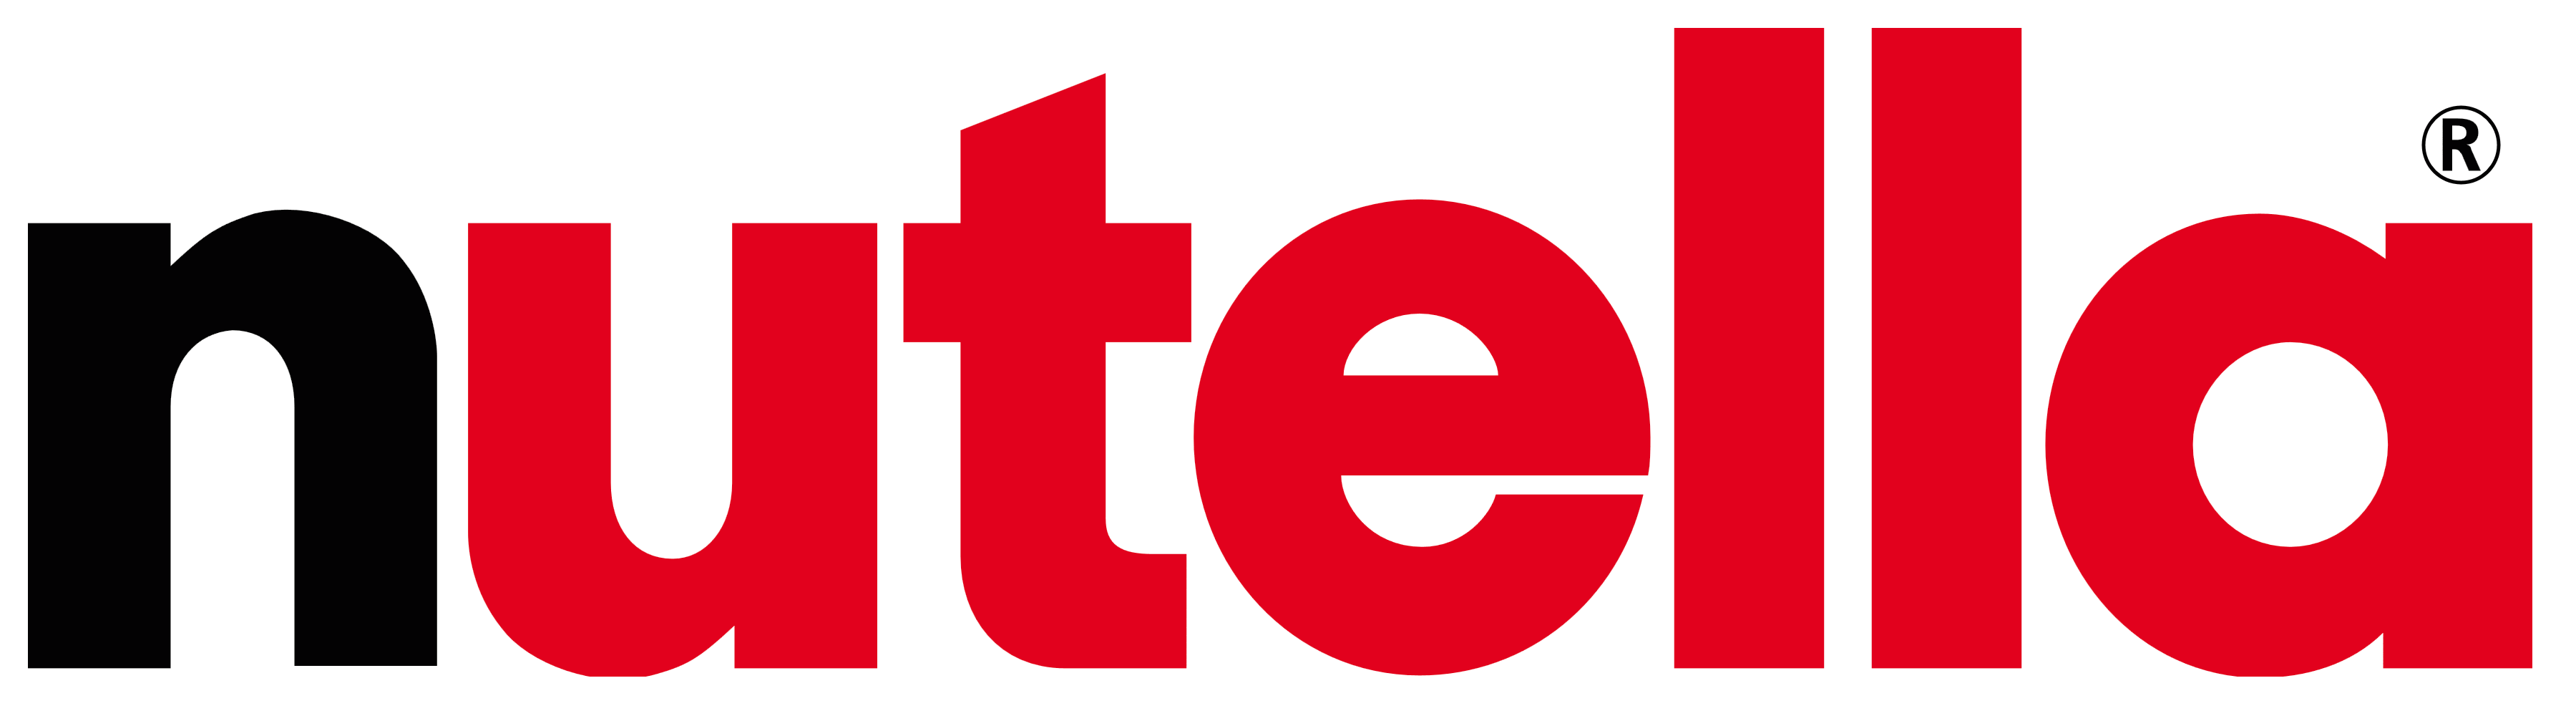 nutella logo